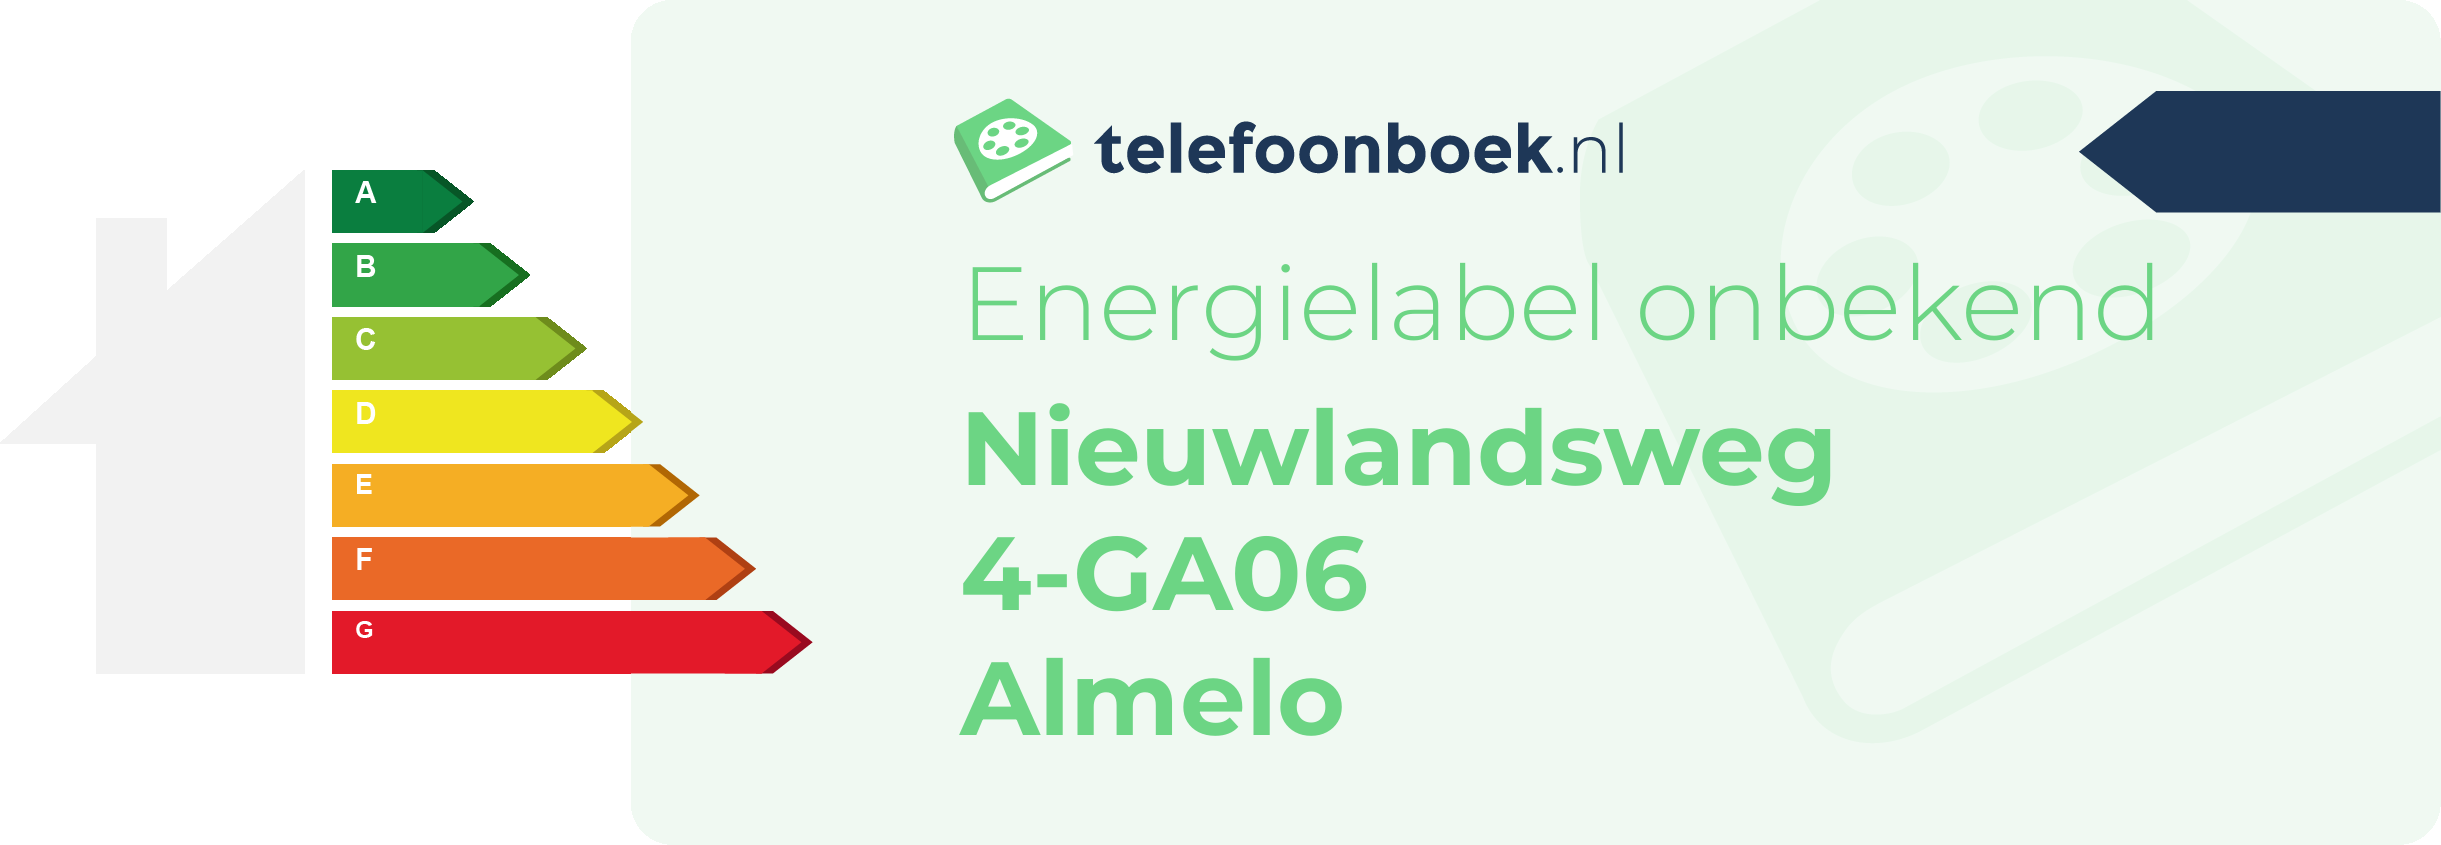 Energielabel Nieuwlandsweg 4-GA06 Almelo